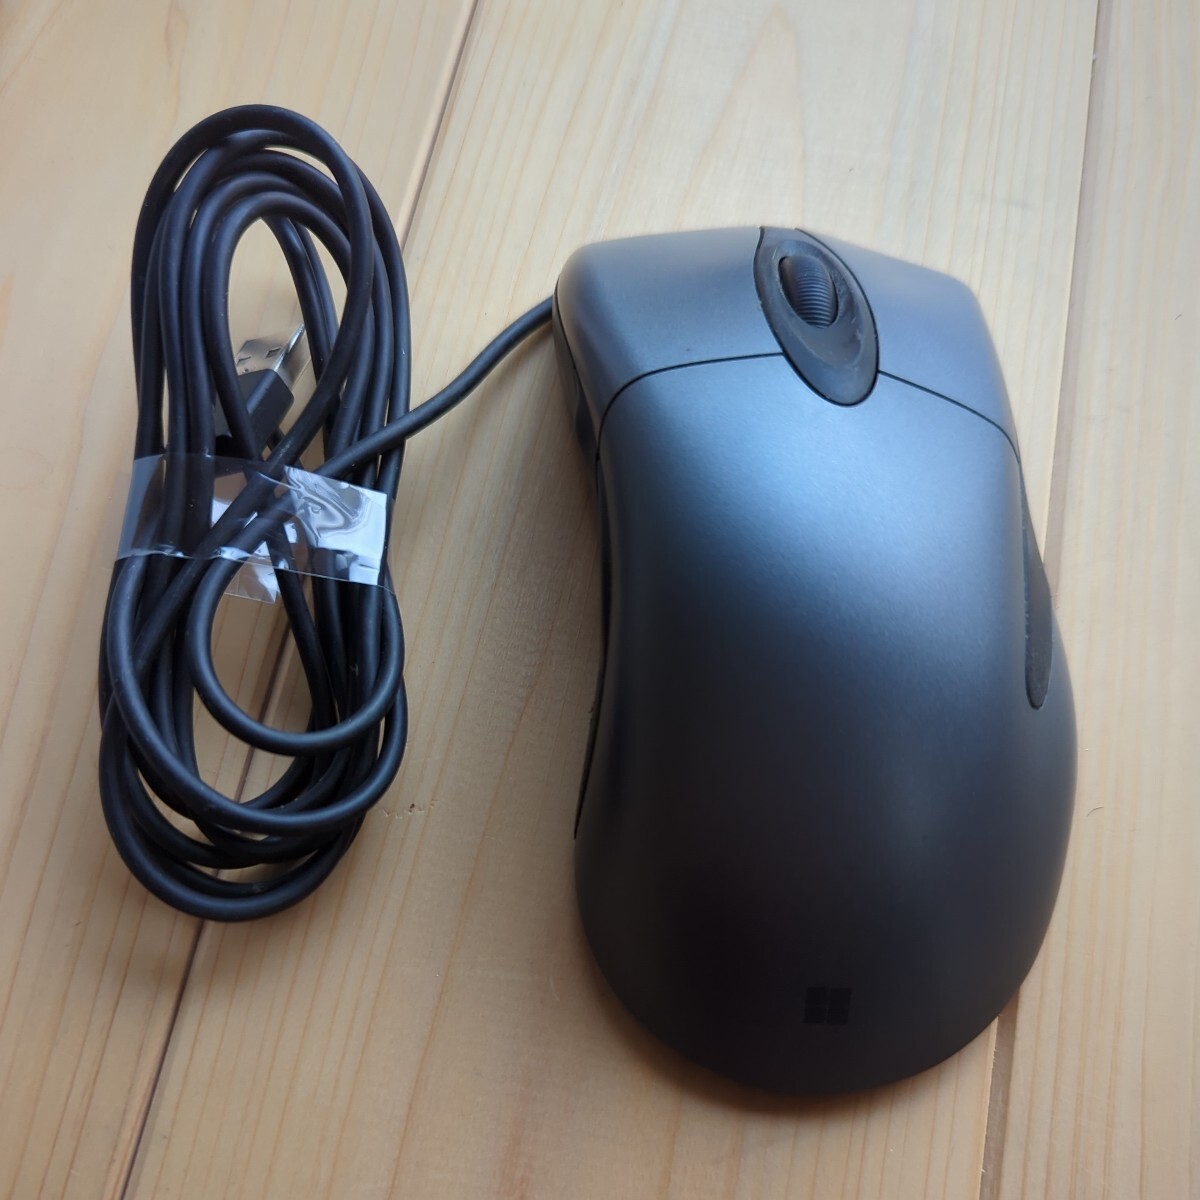  Microsoft Classic Intell mouse 